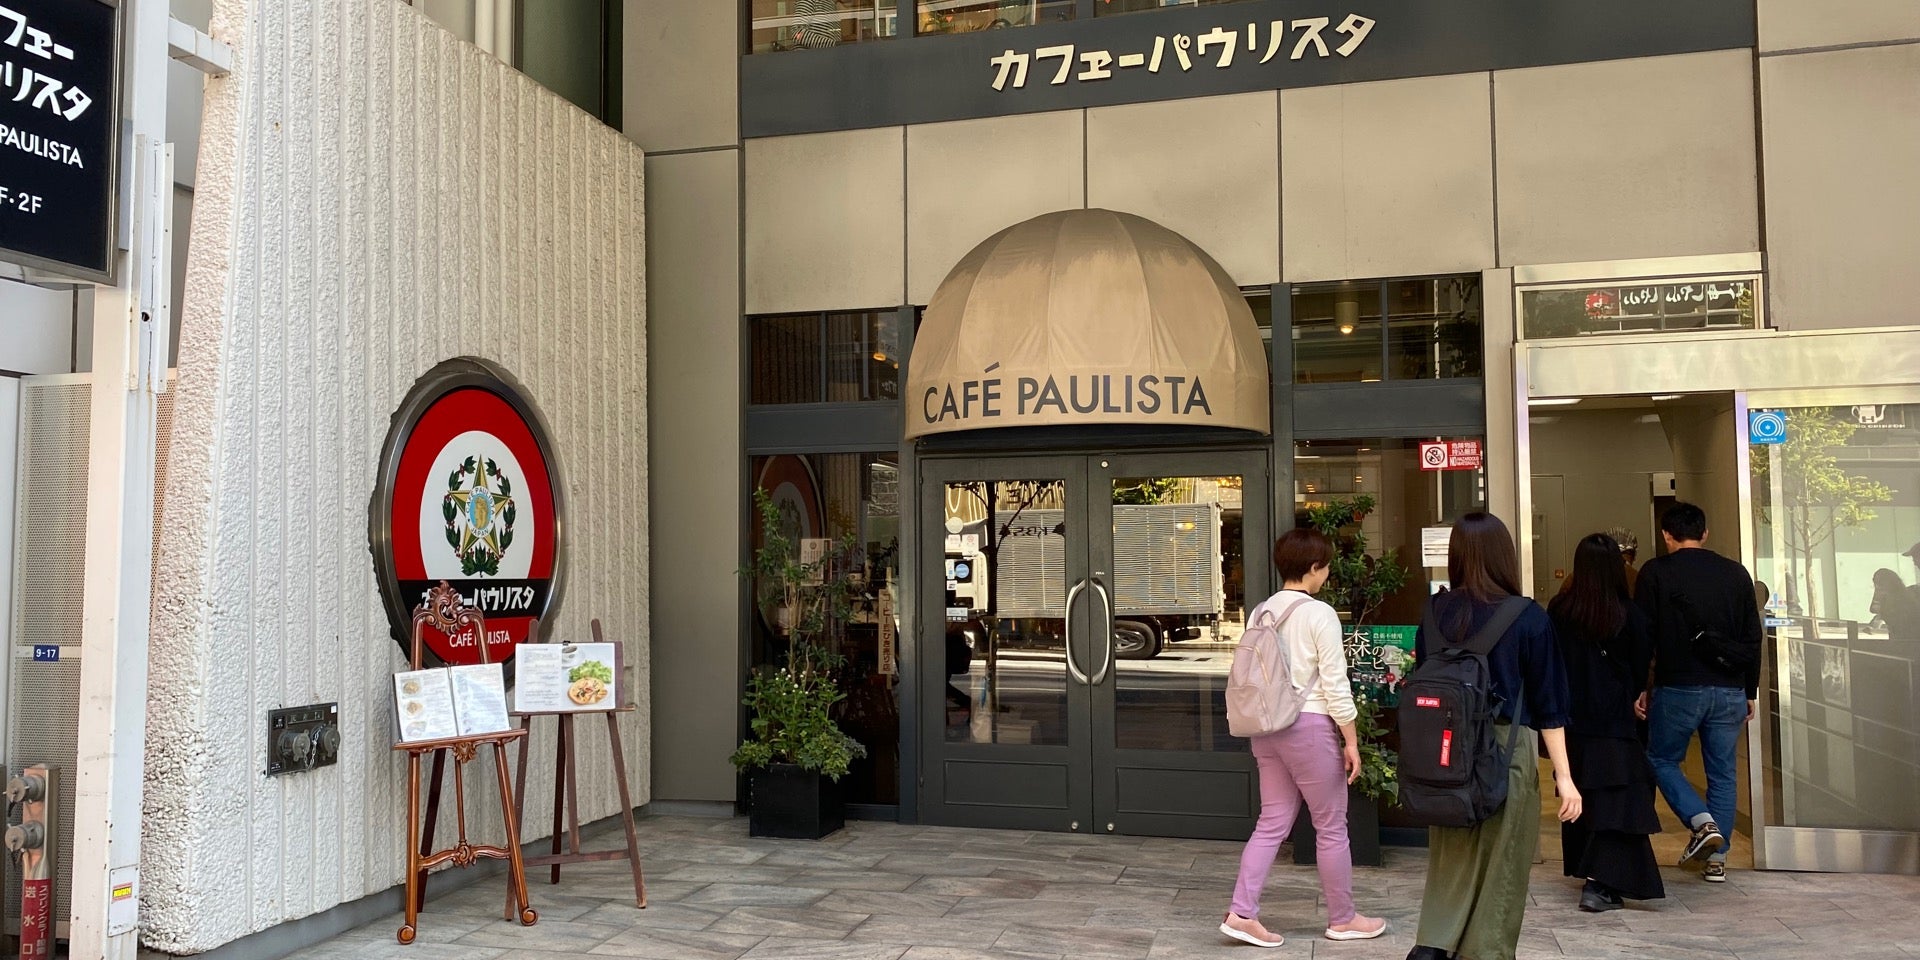 Café Paulista (カフェーパウリスタ)